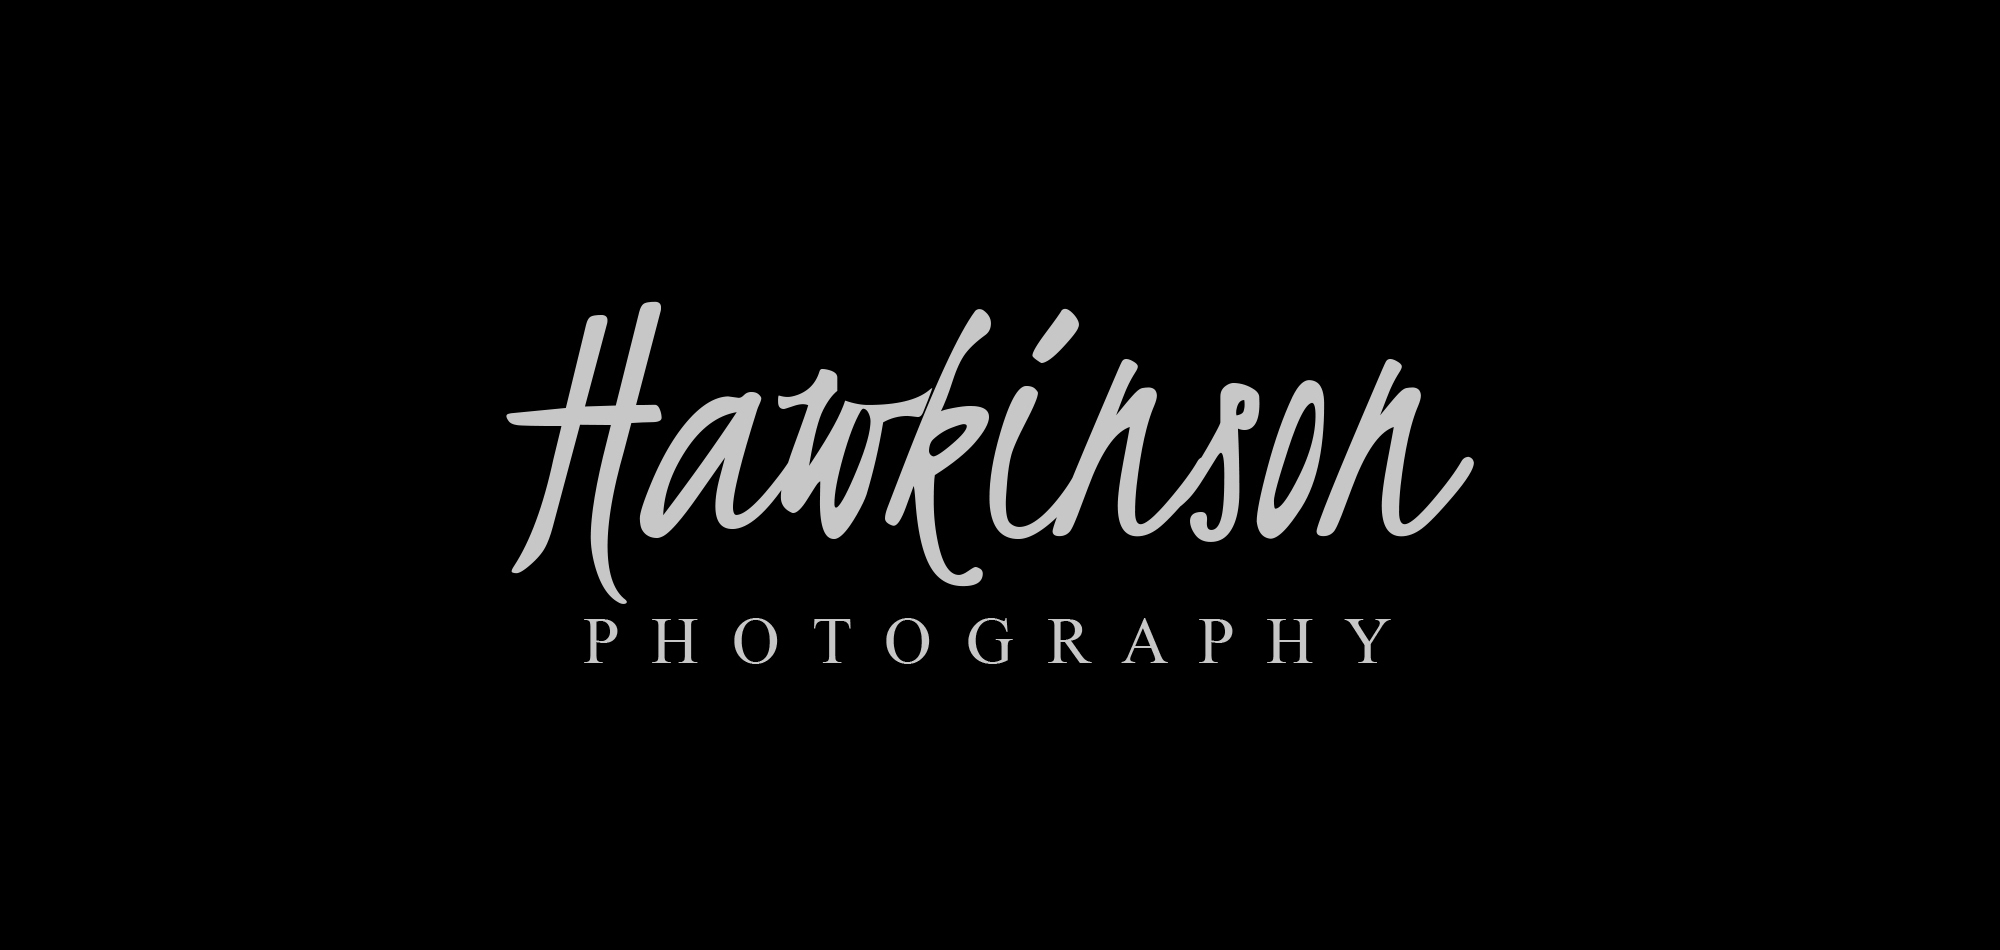 Hawkinson Photography